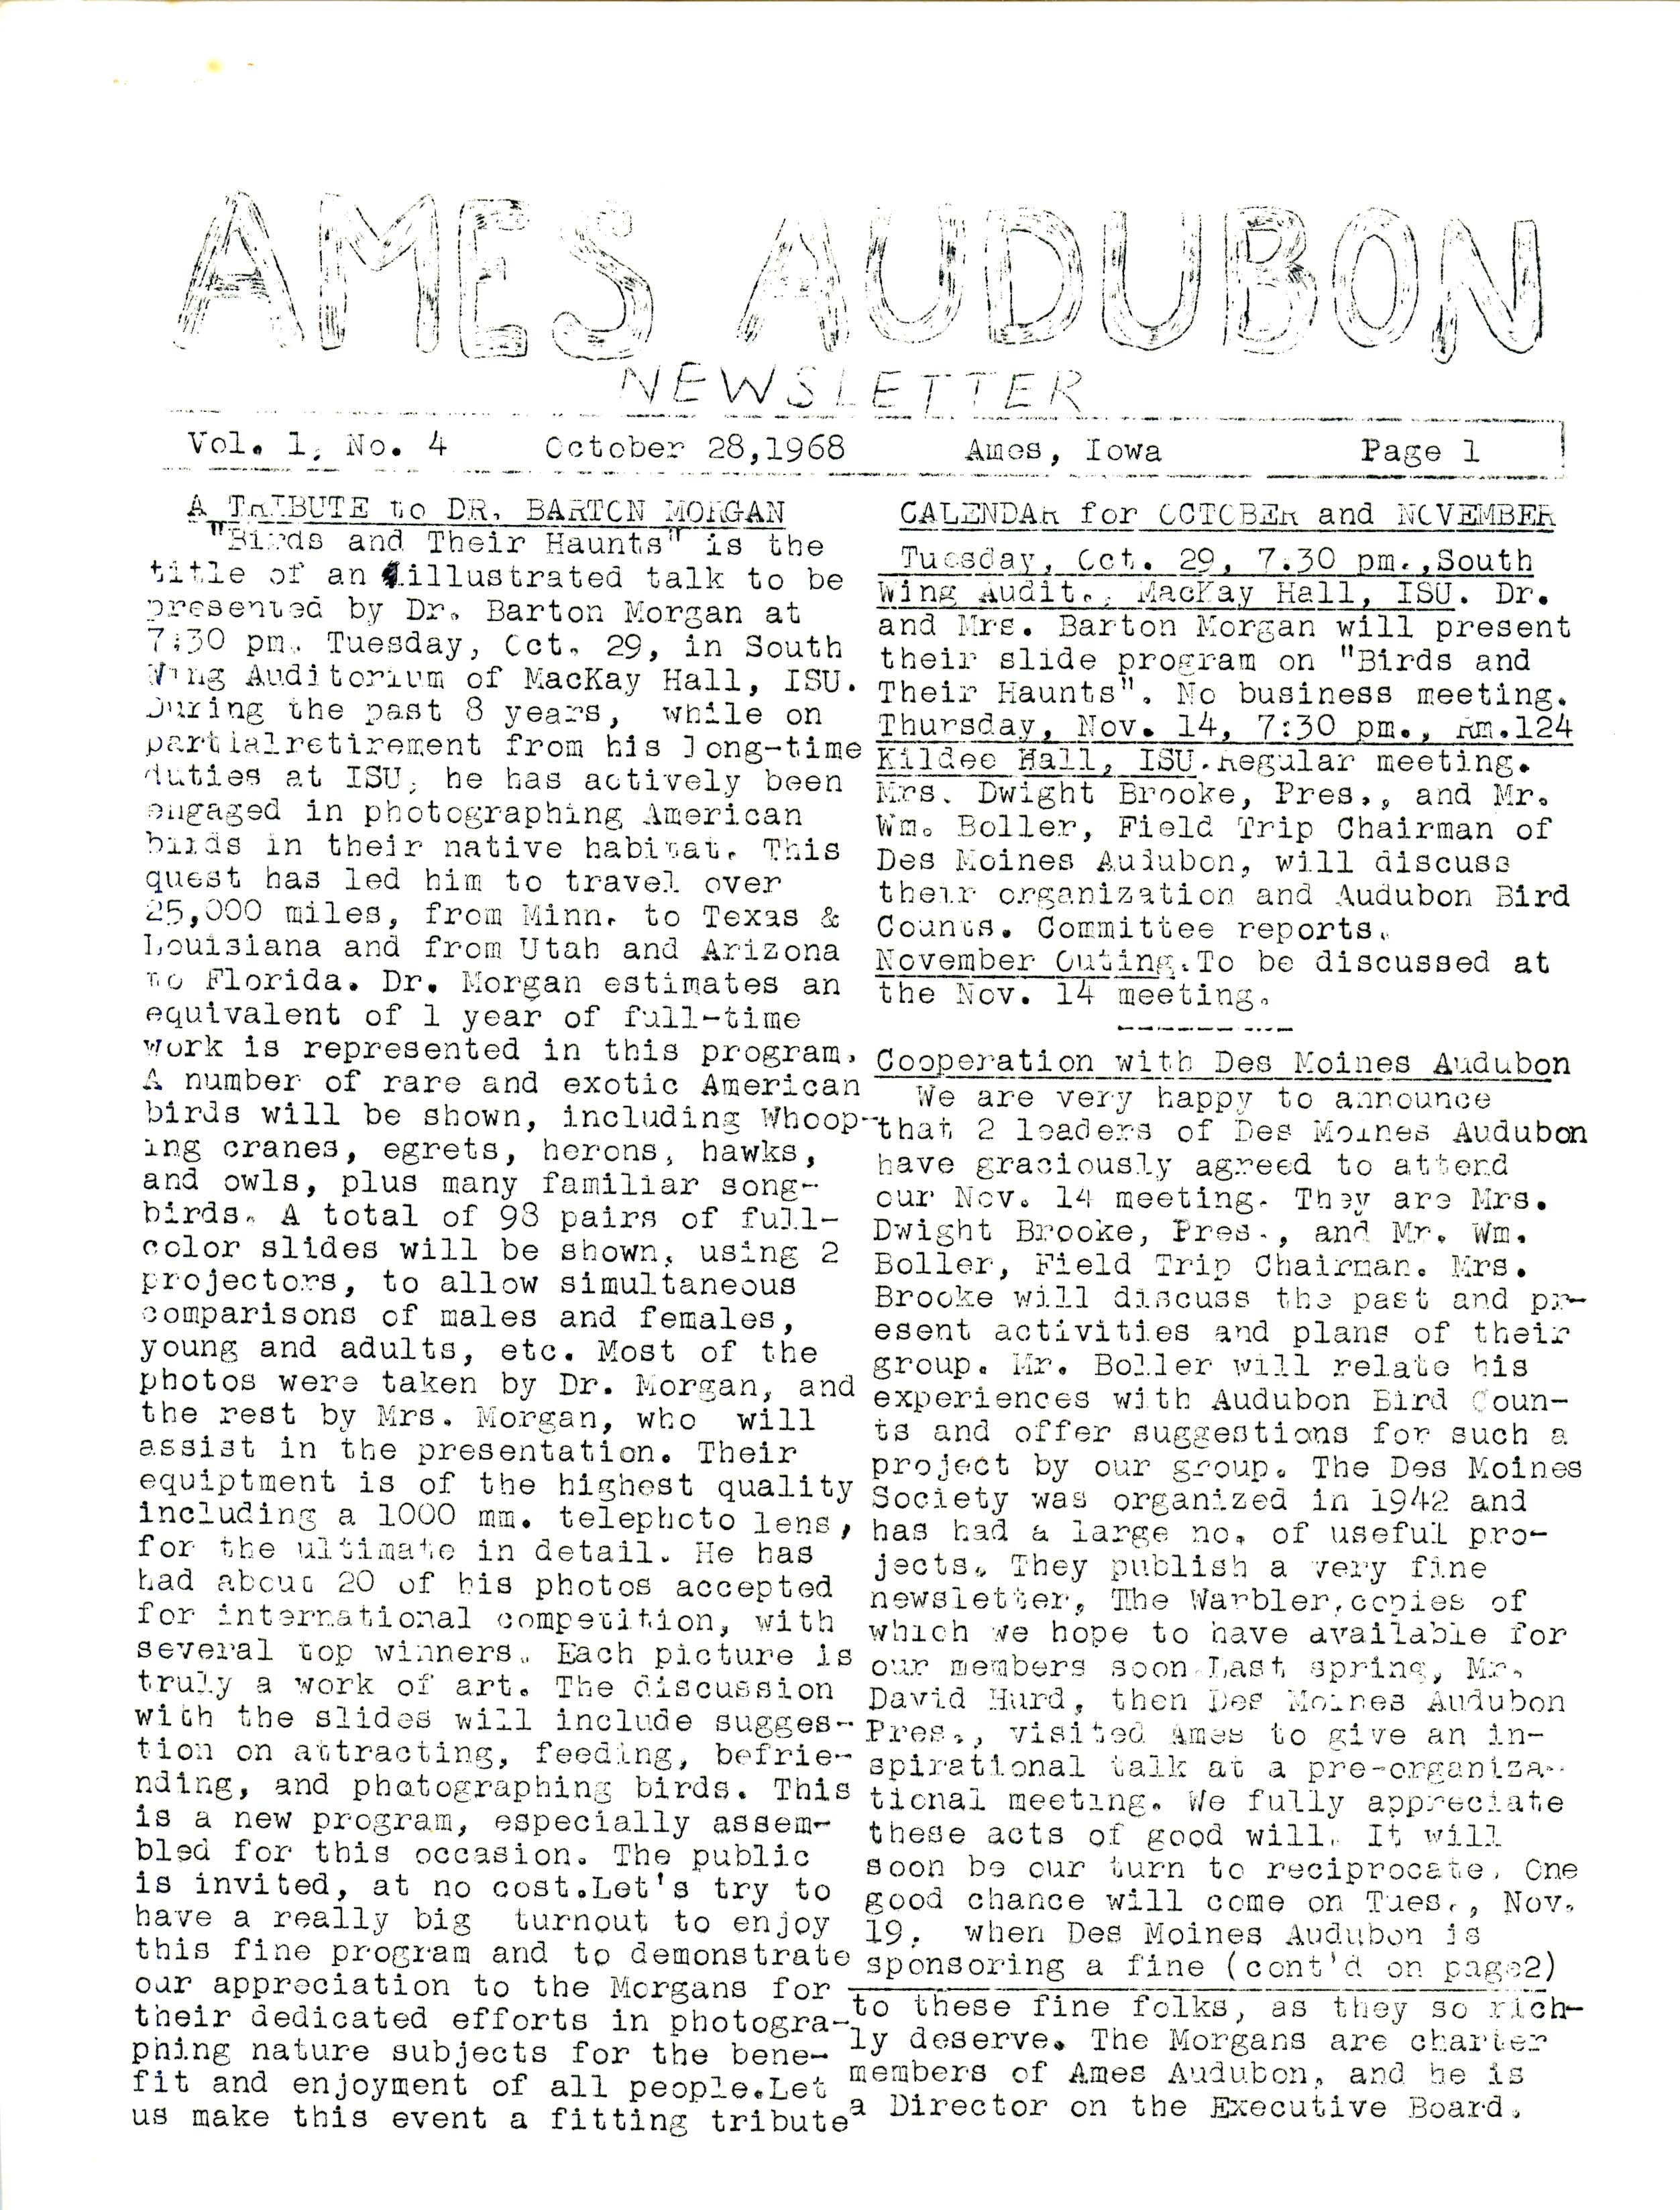 Ames Audubon Newsletter, Volume 1, Number 4, October 28, 1968